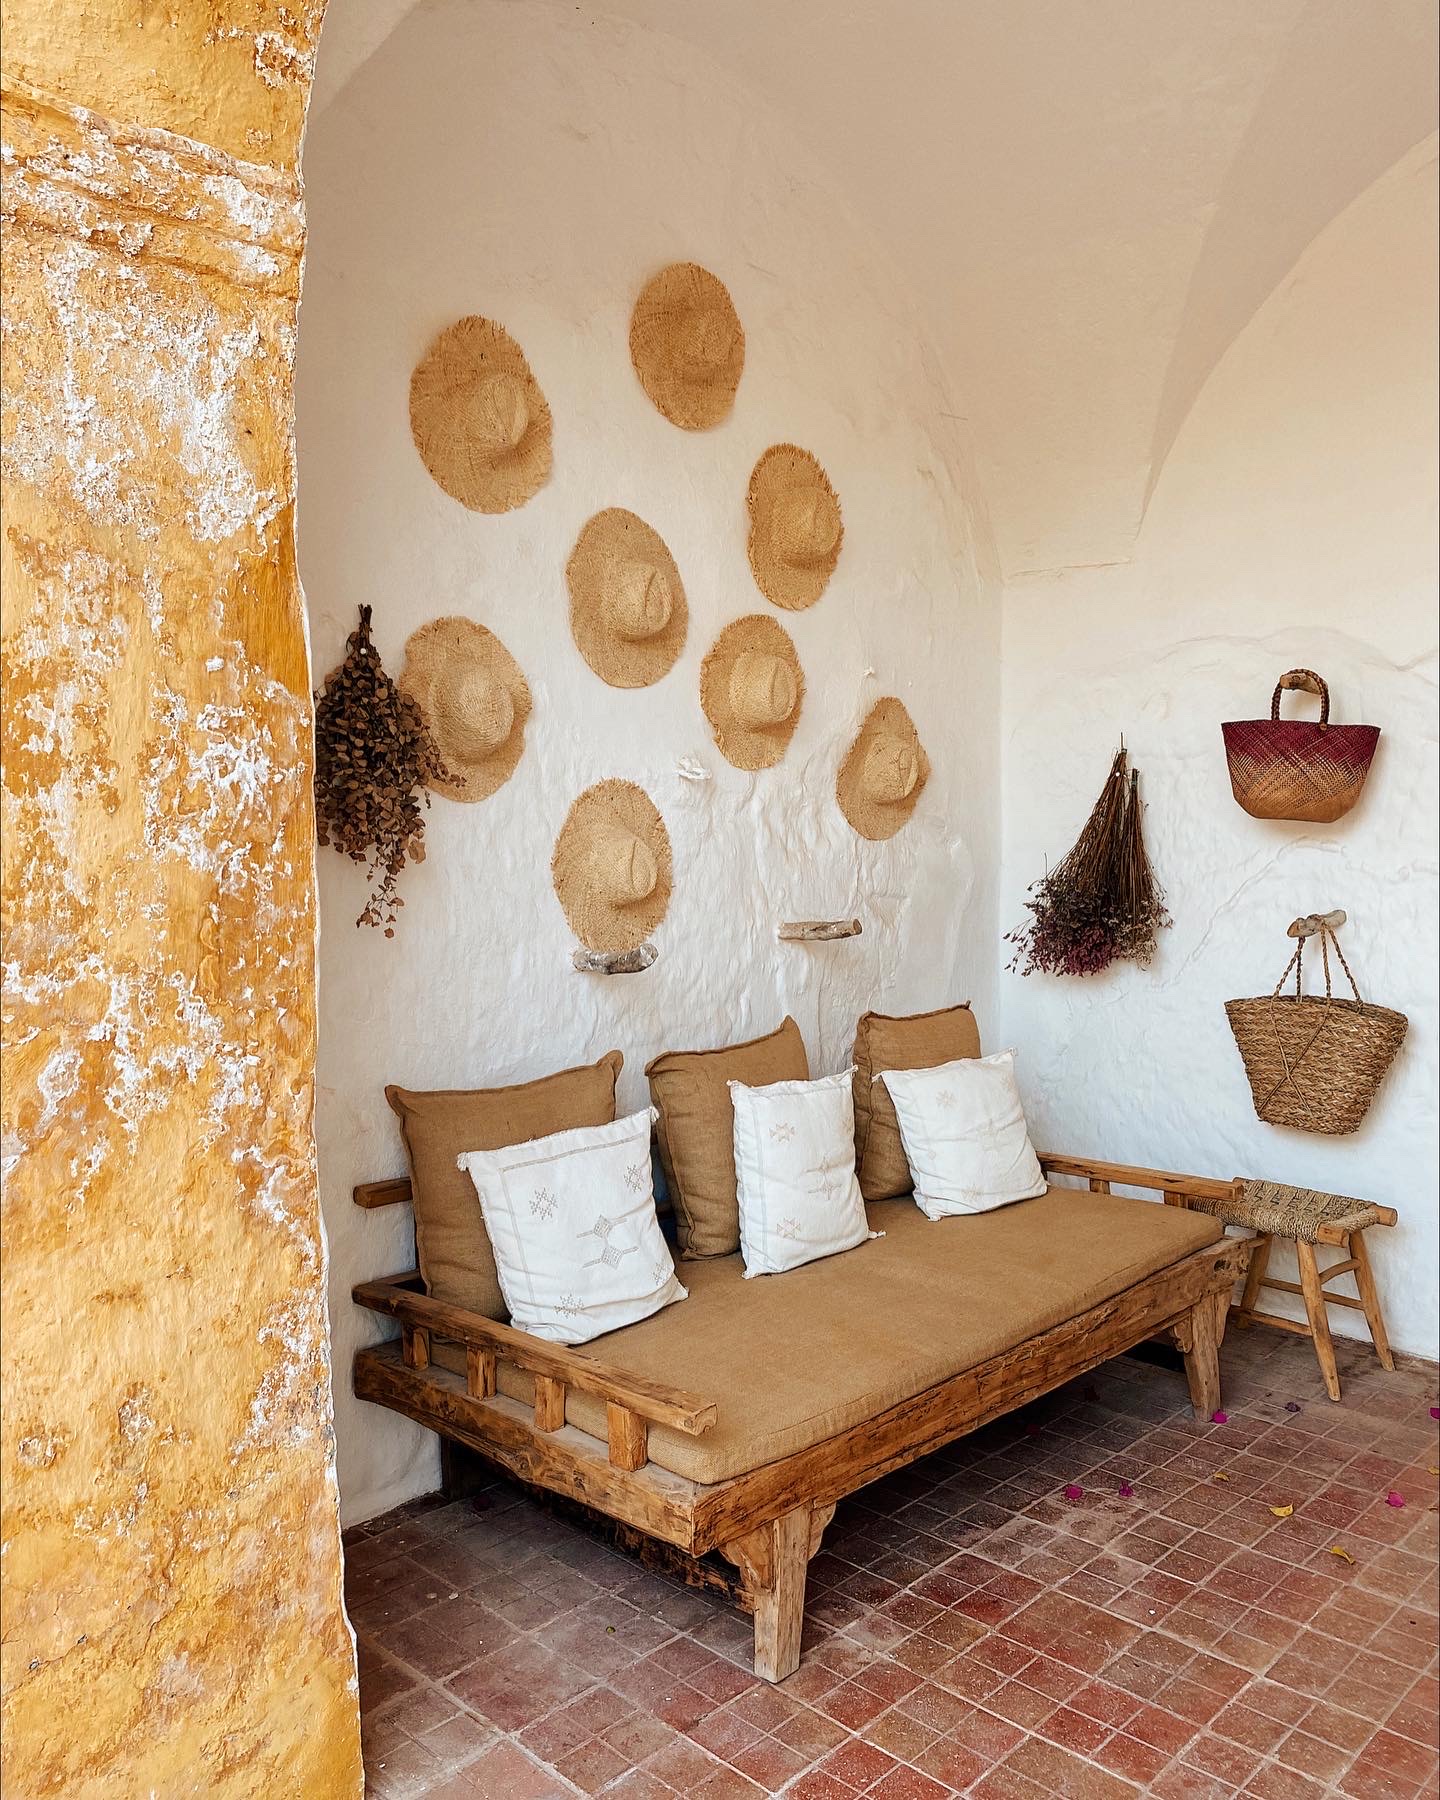 Rattan Hats Wall Feature | Nonna Bazaar Menorca | Menorca Travel Tips | Monica Beatrice Blog